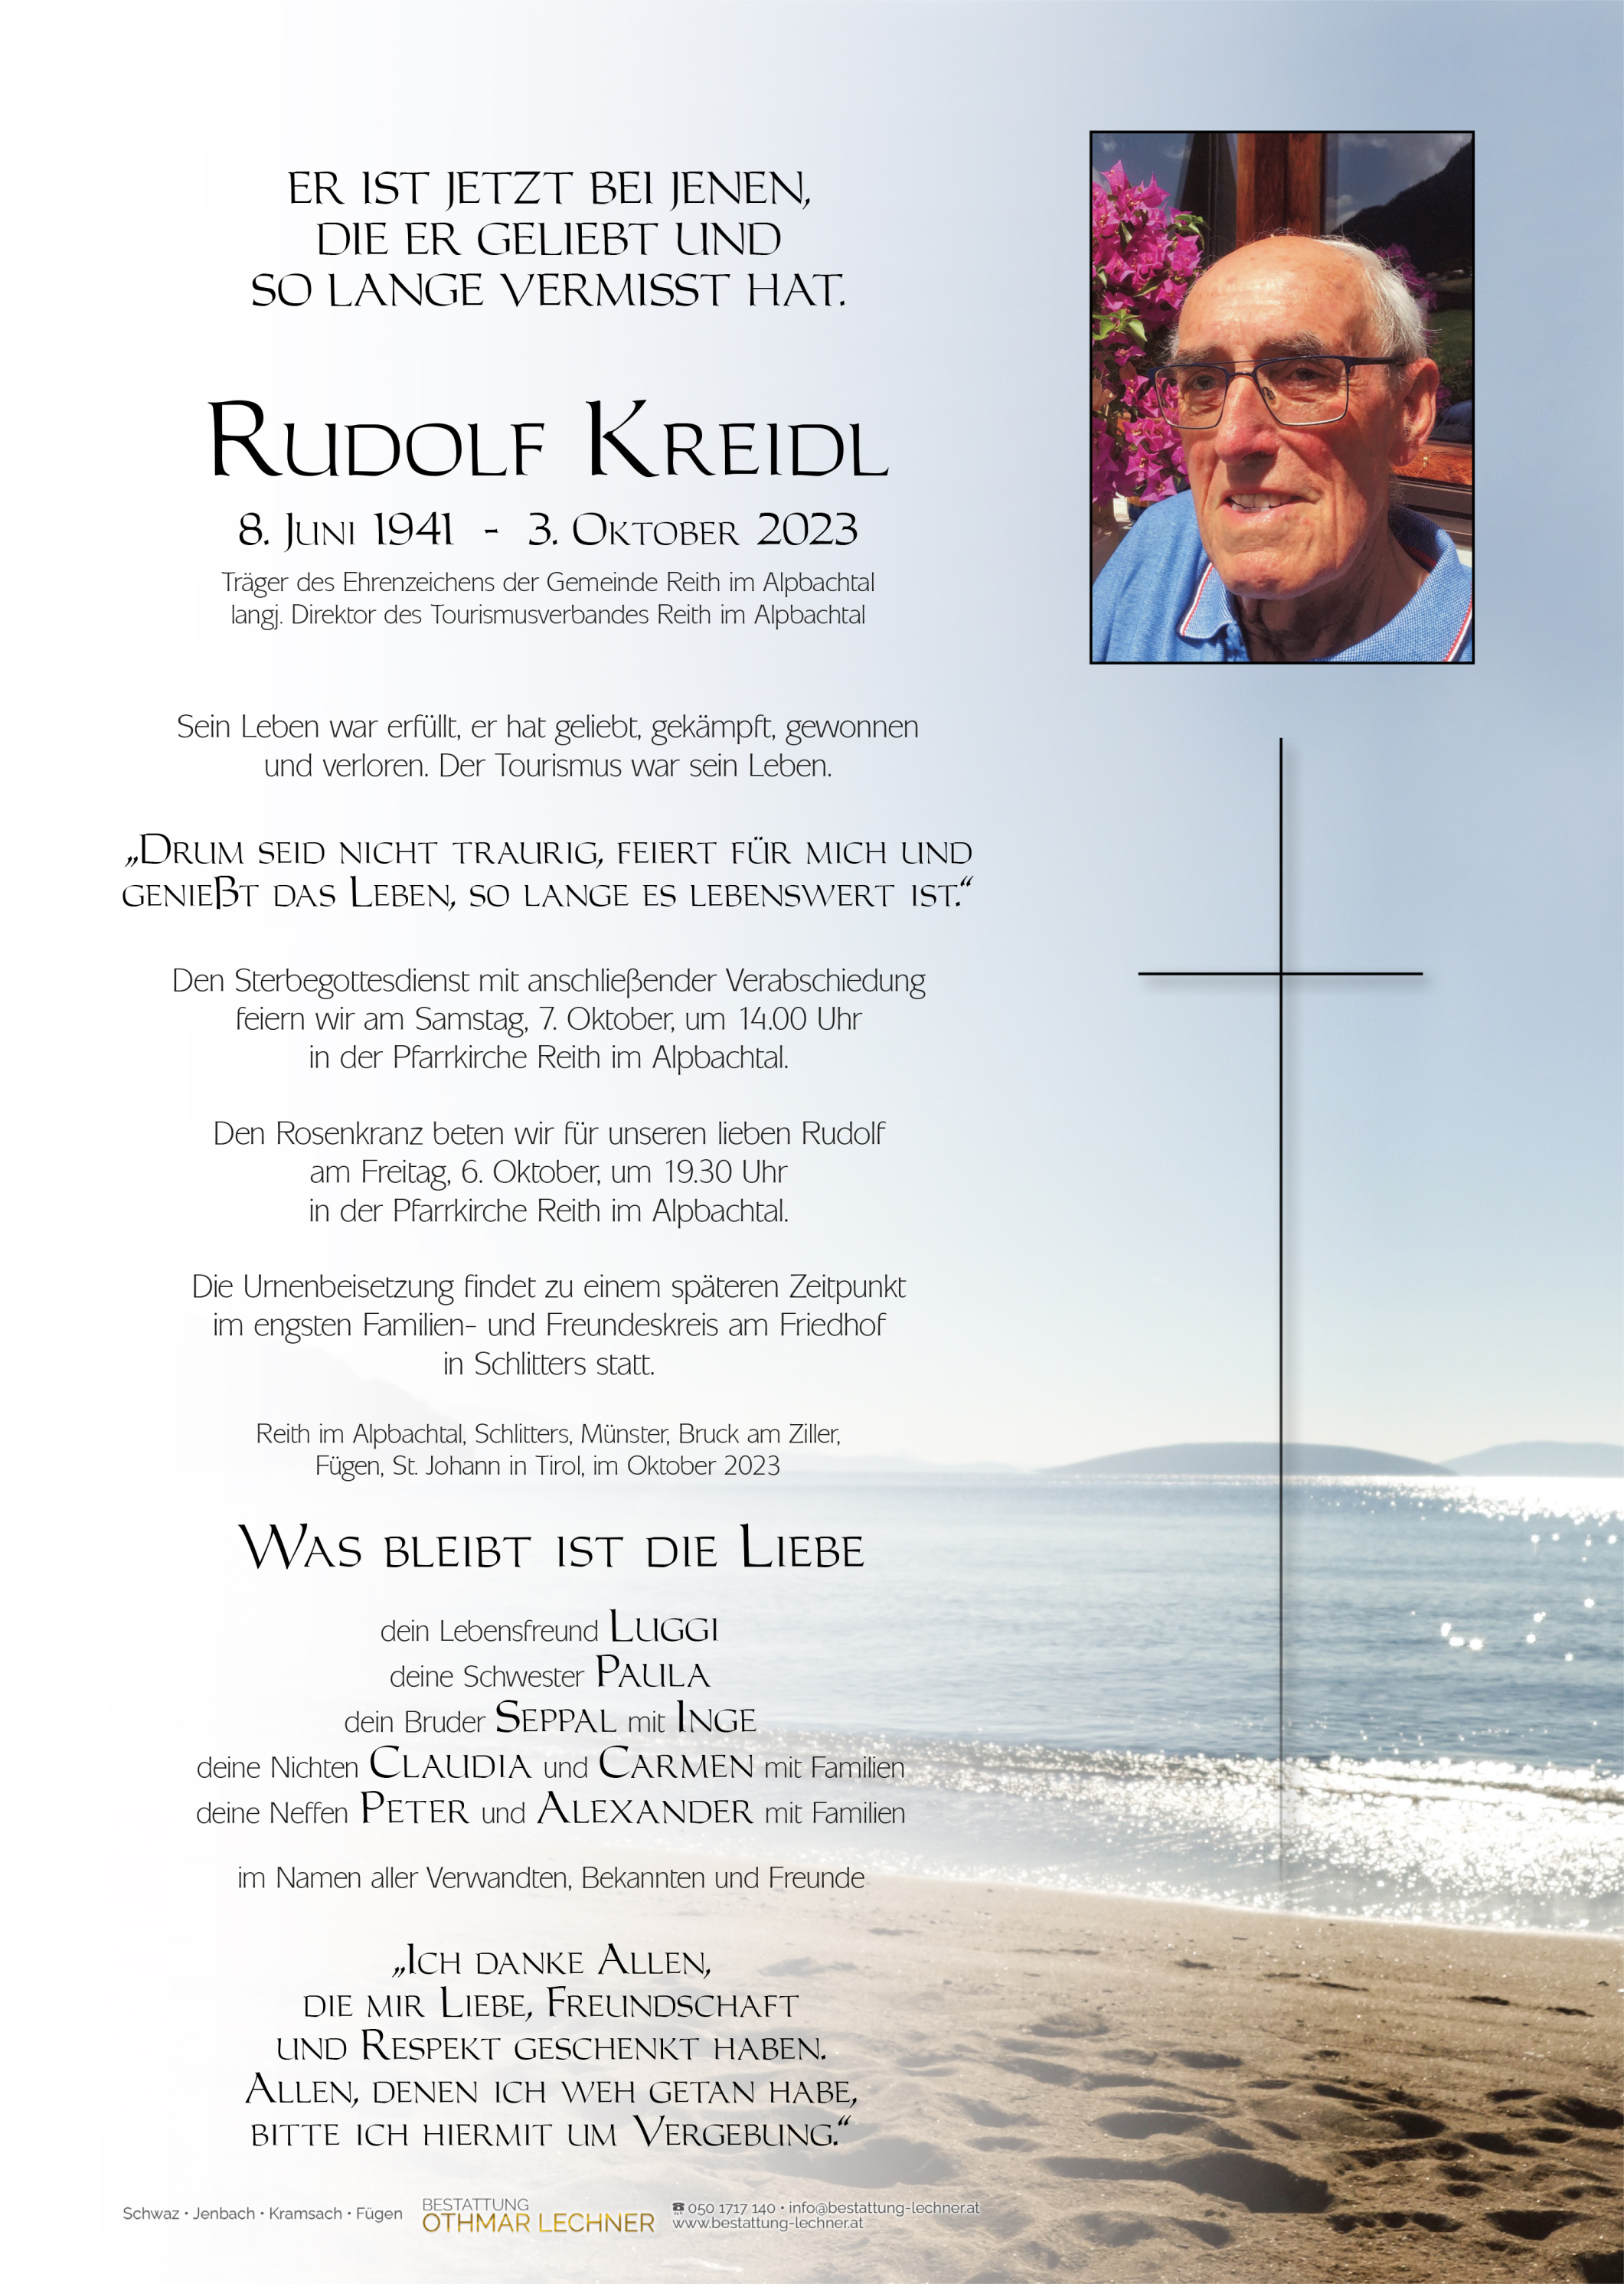 Rudolf Kreidl